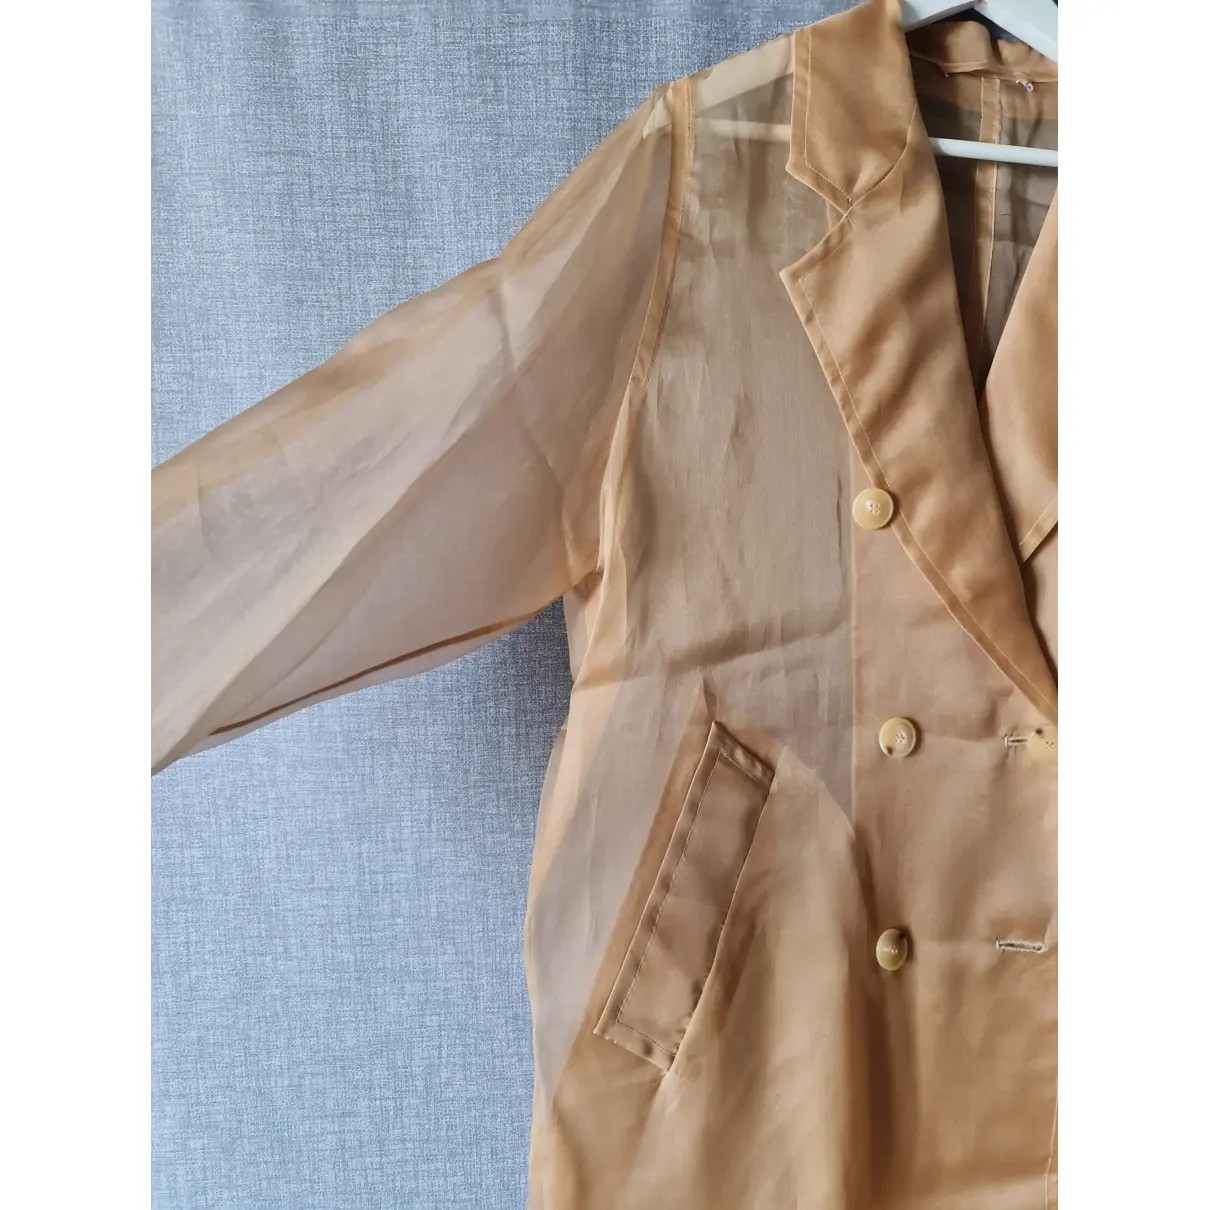 Buy Max Mara Max Mara Atelier silk coat online